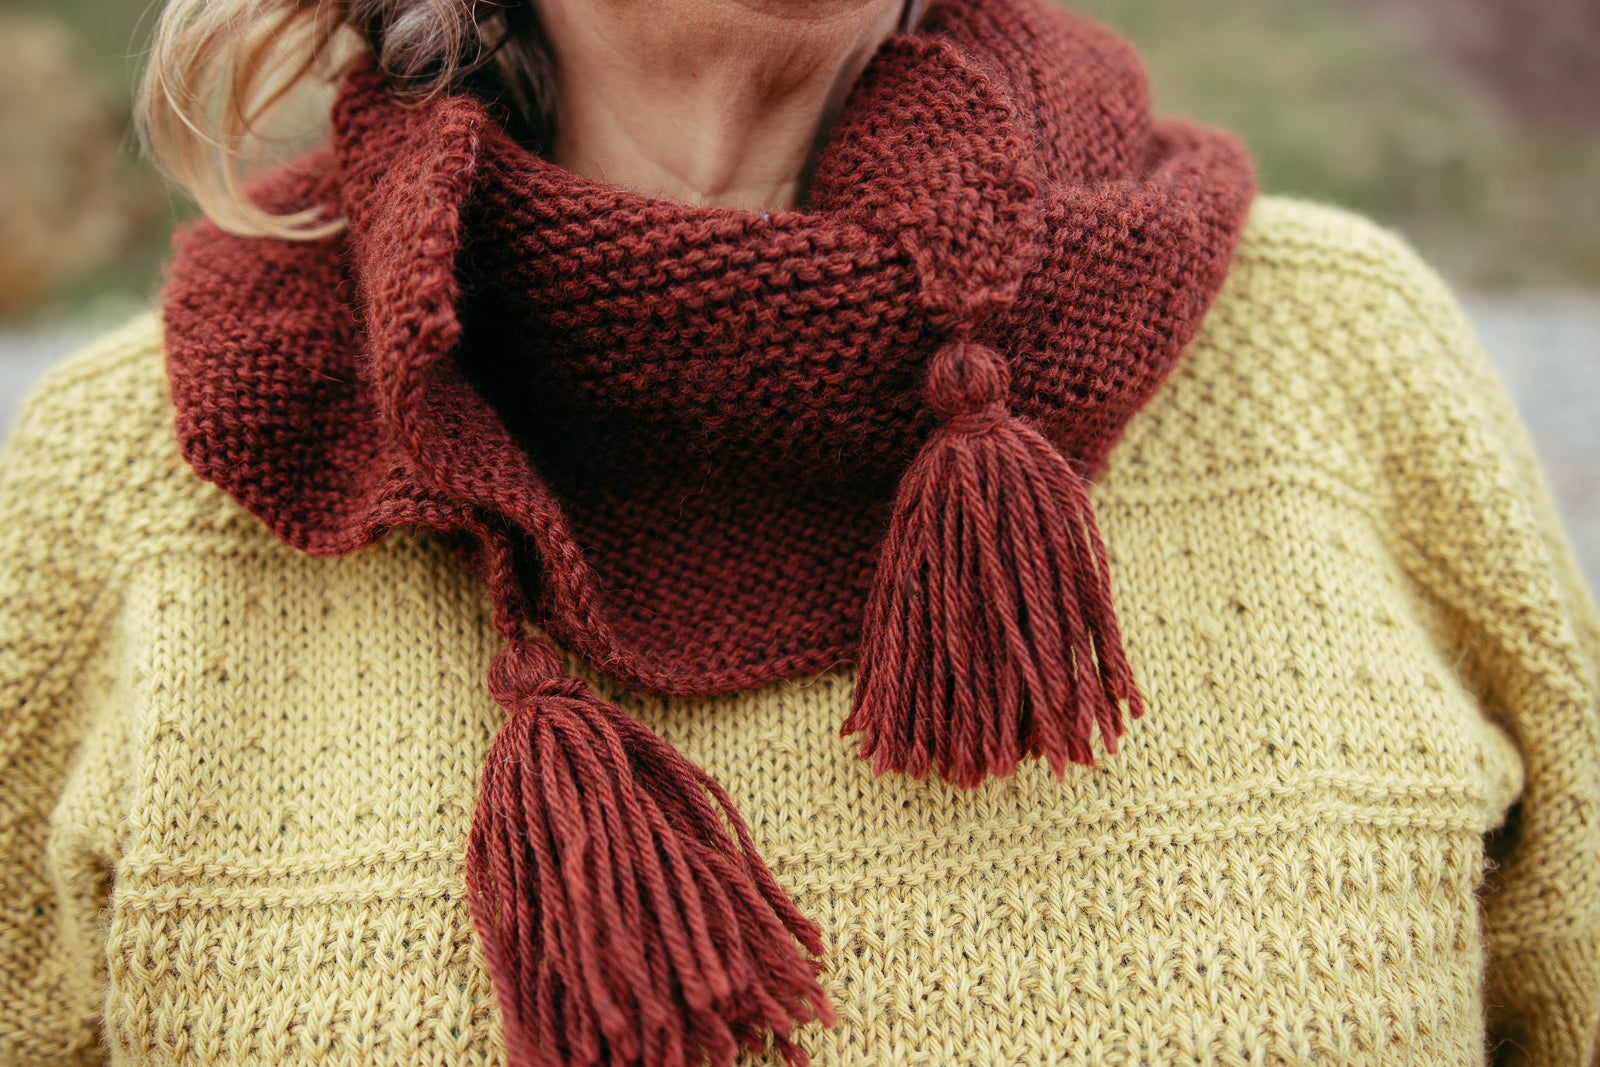 This alpaca wool knitting kit uses alpaca yarn from British and Irish farms